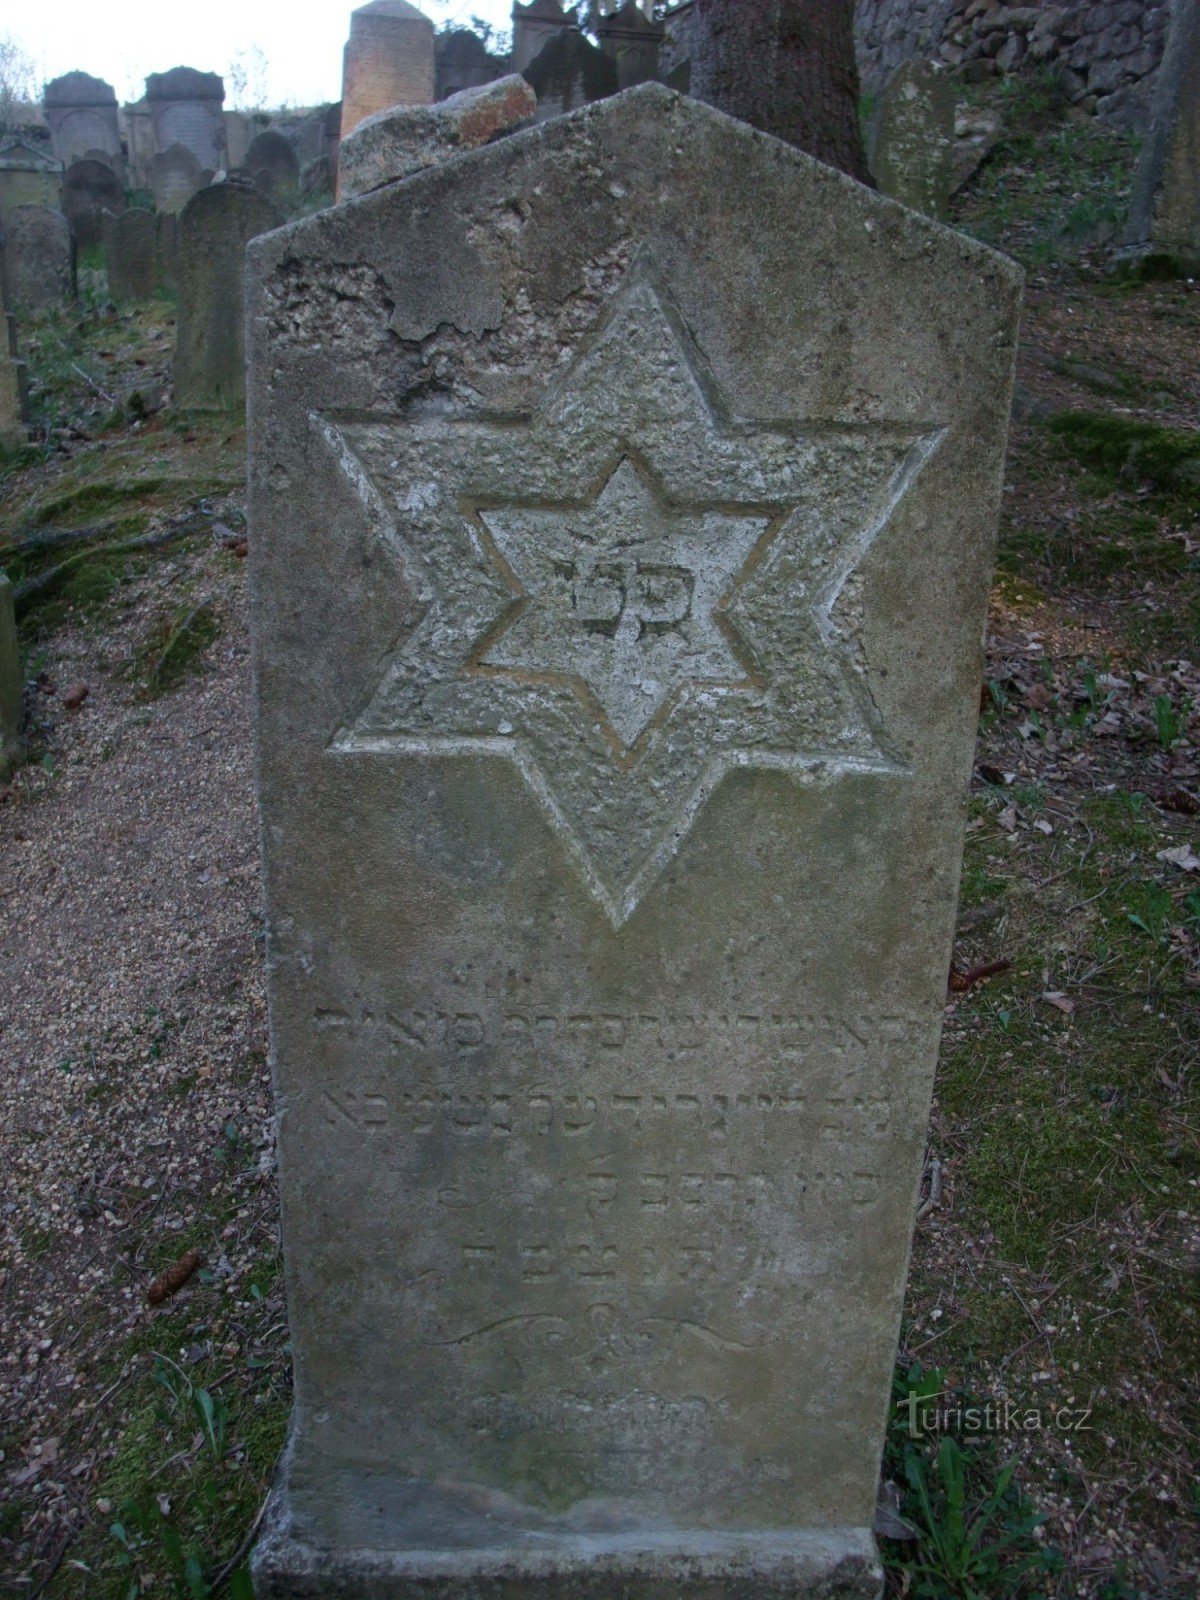 Judisk kyrkogård i Úbočí